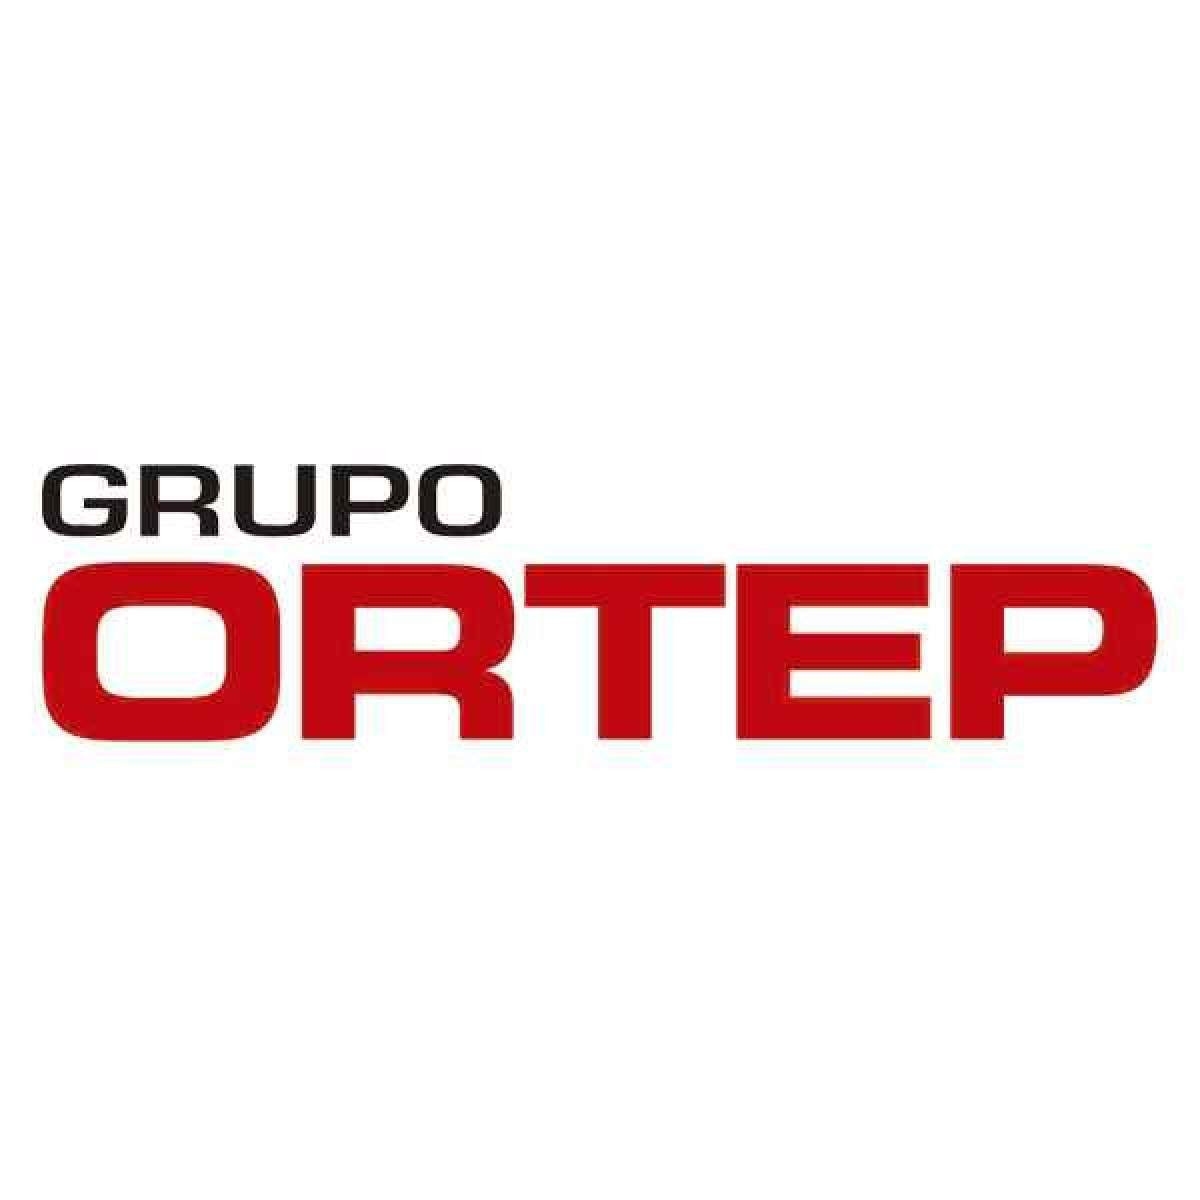 Grupo ORTEP